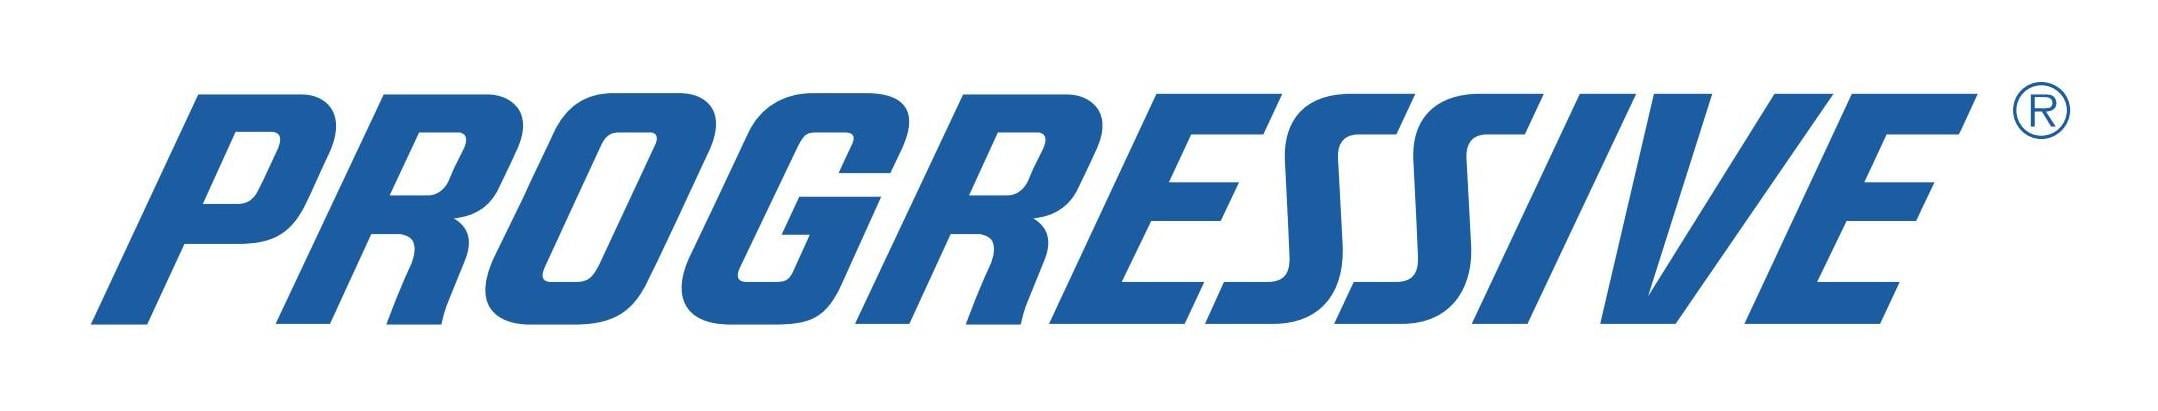 Progressive Drive Logo - progressive-logo - LATN